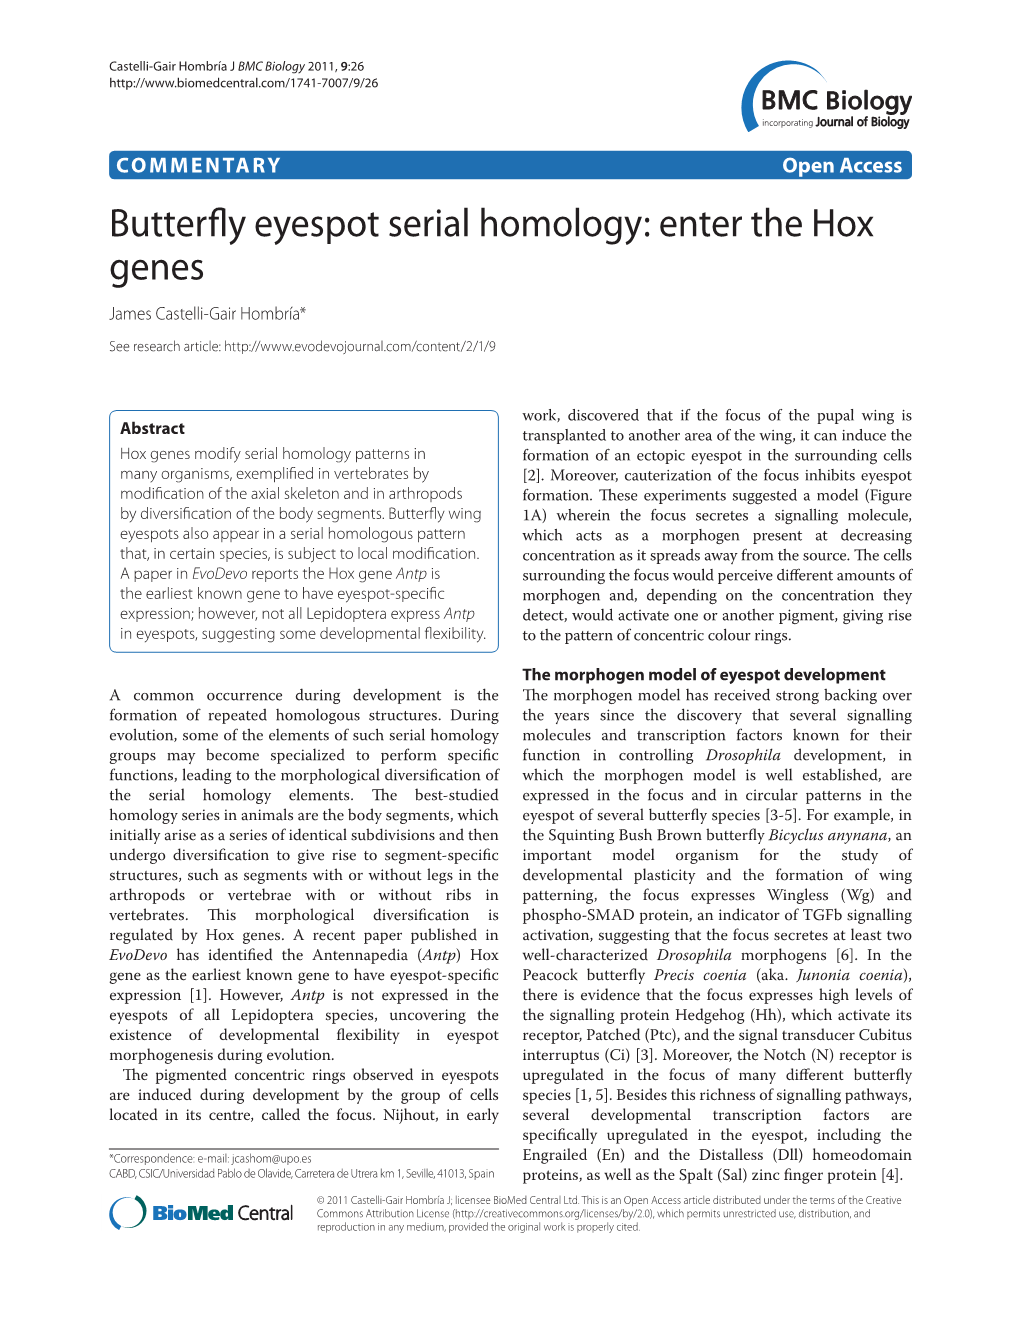 Butterfly Eyespot Serial Homology: Enter the Hox Genes James Castelli-Gair Hombría*